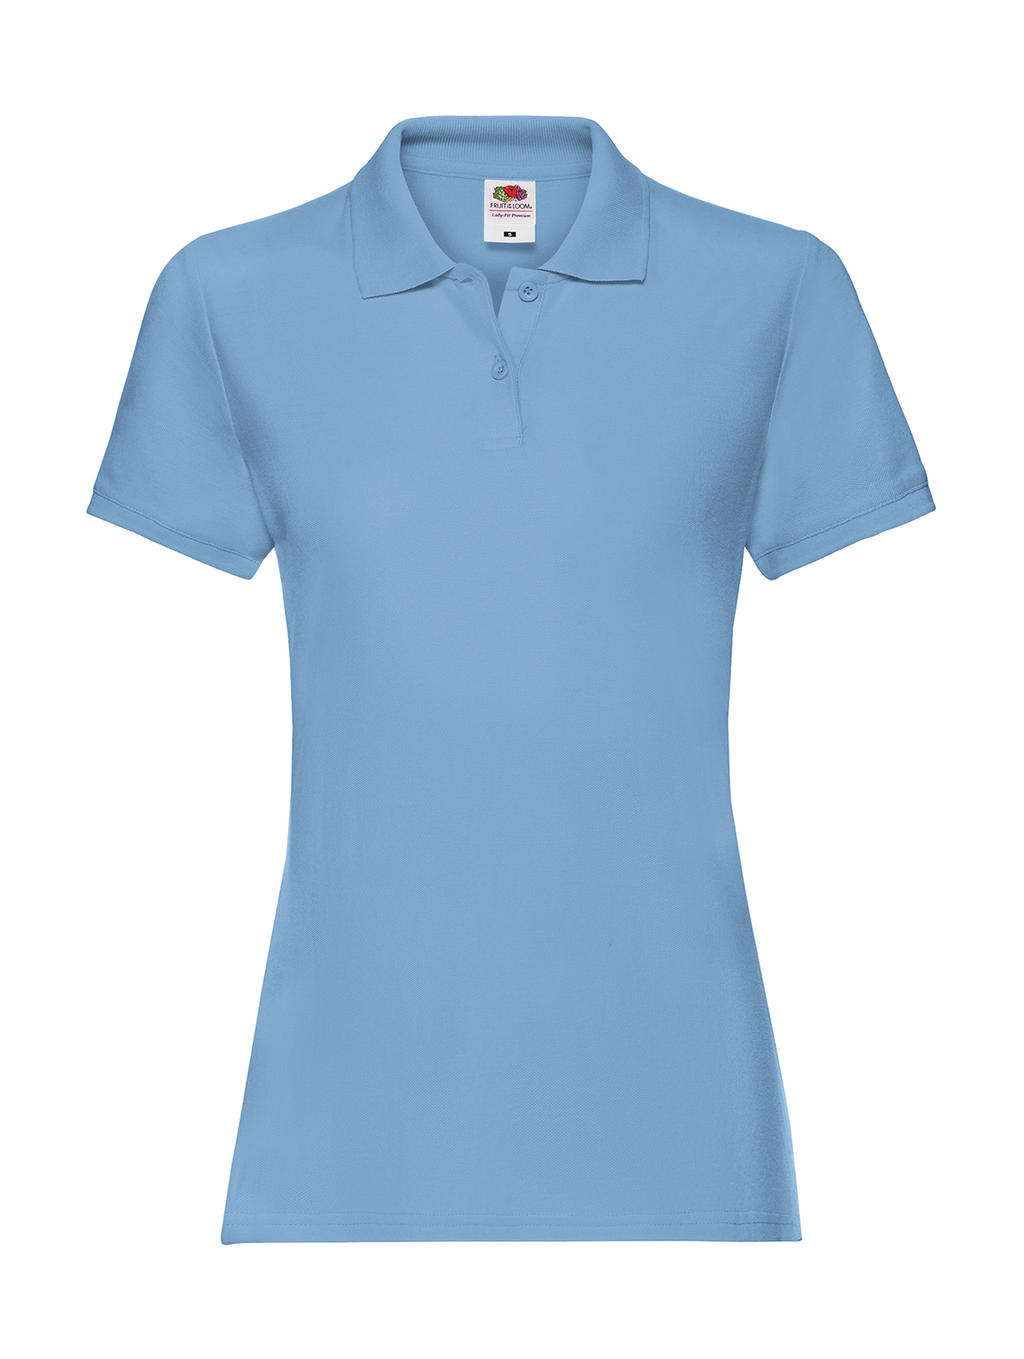  Ladies Premium Polo in Farbe Sky Blue